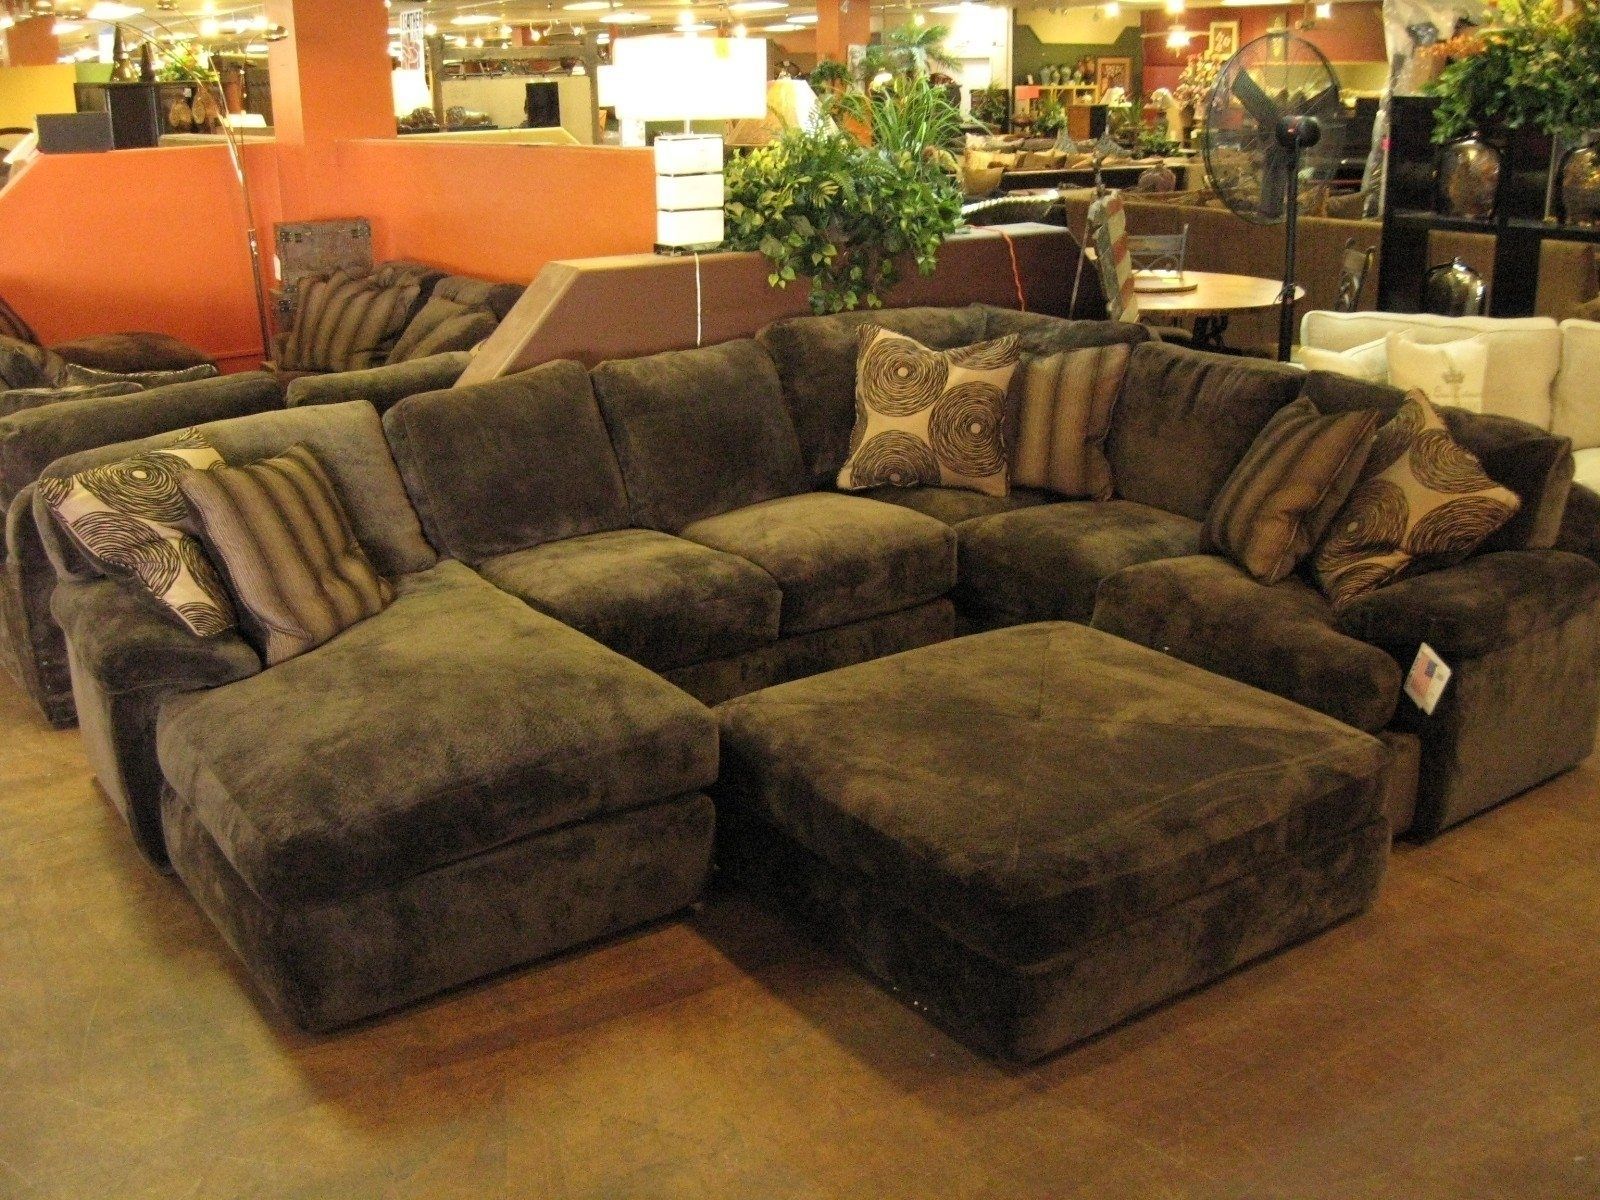 Stylish Sectional Sofa With Oversized Ottoman Mediasupload For Sectional Sofas With Oversized Ottoman 